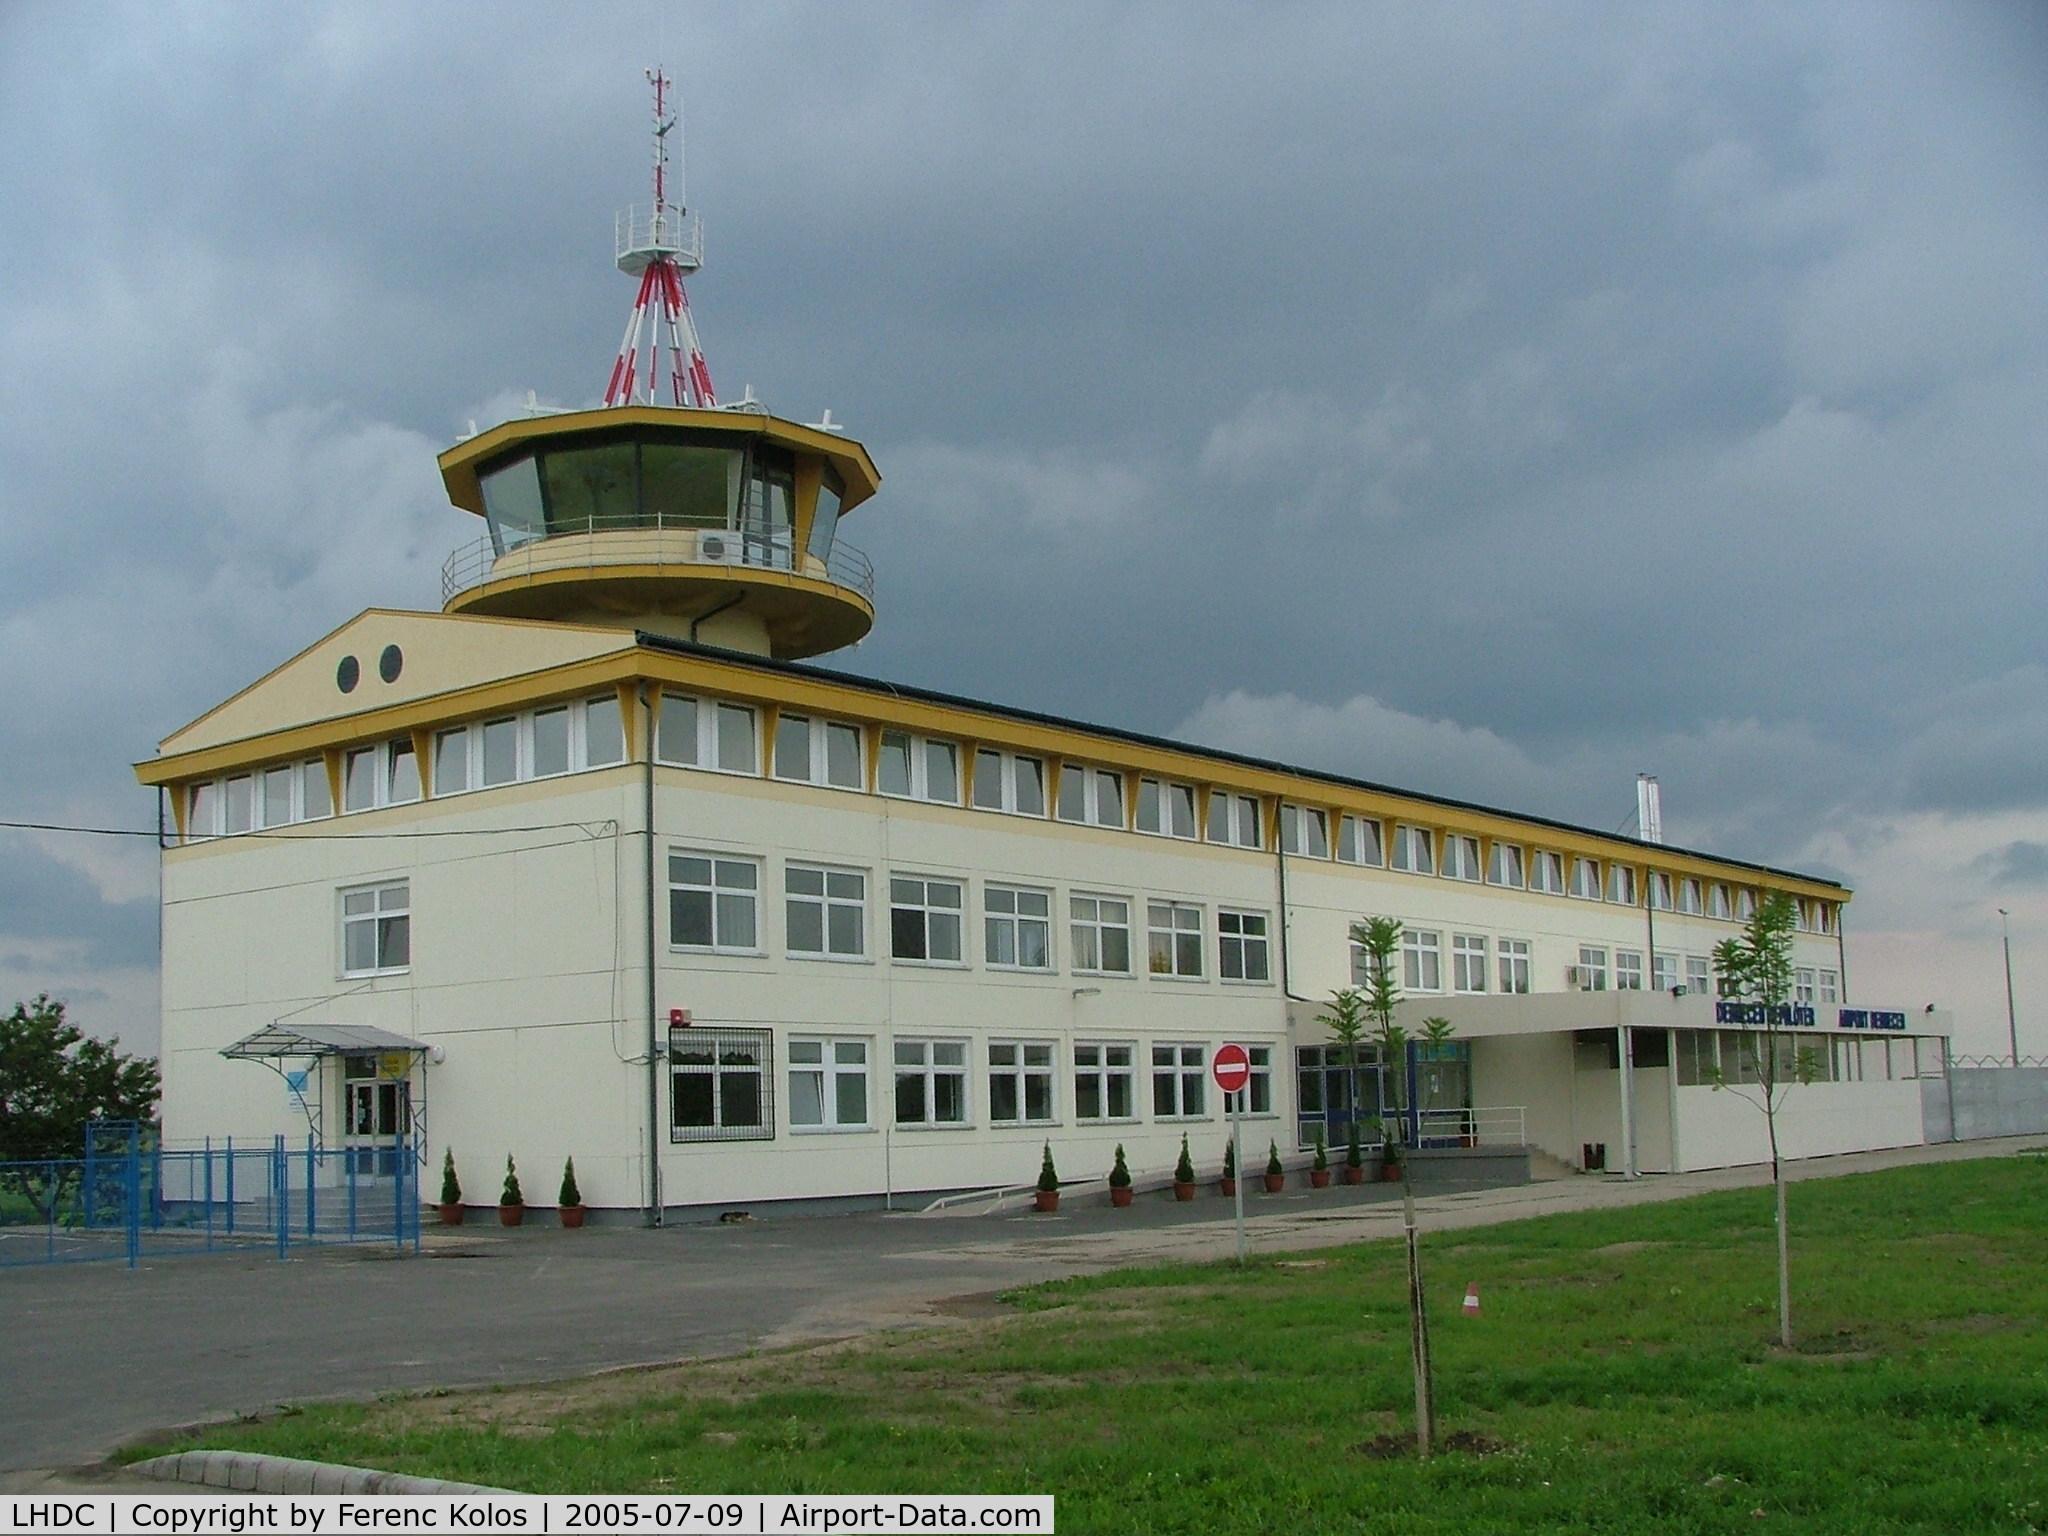 Debrecen International Airport, Debrecen Hungary (LHDC) - Debrecen